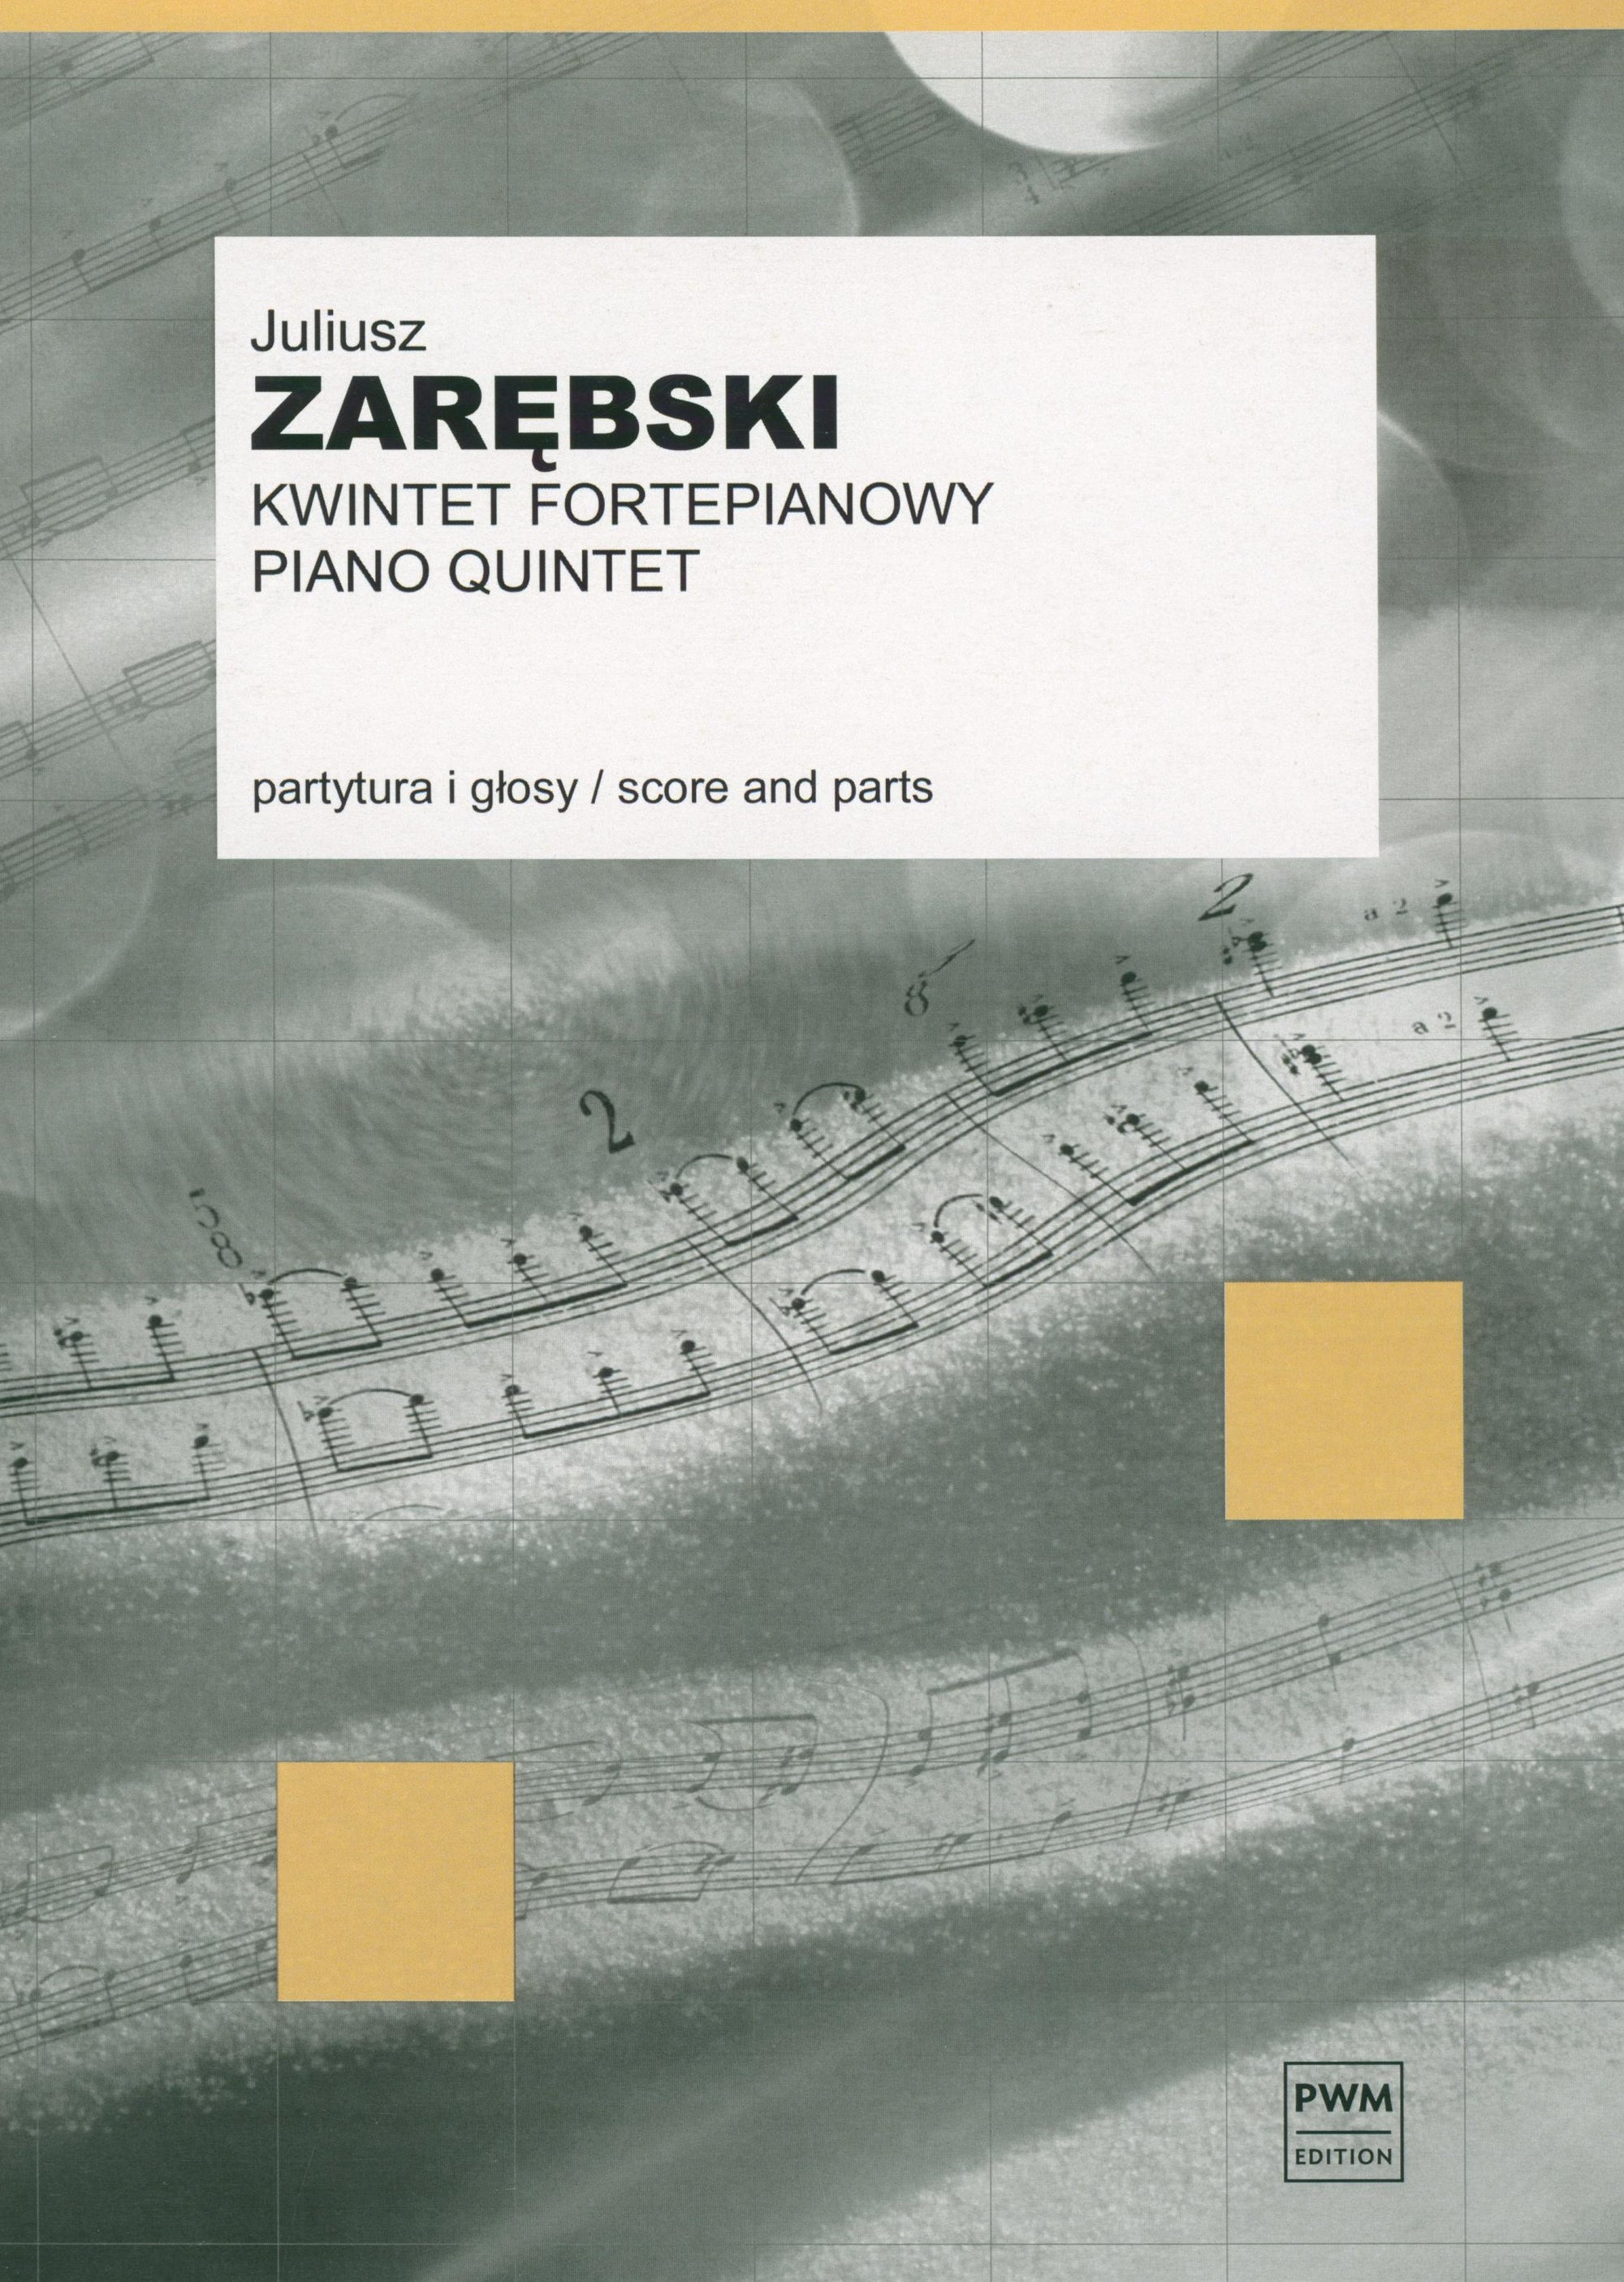 Zarębski: Piano Quintet in G Minor, Op. 34